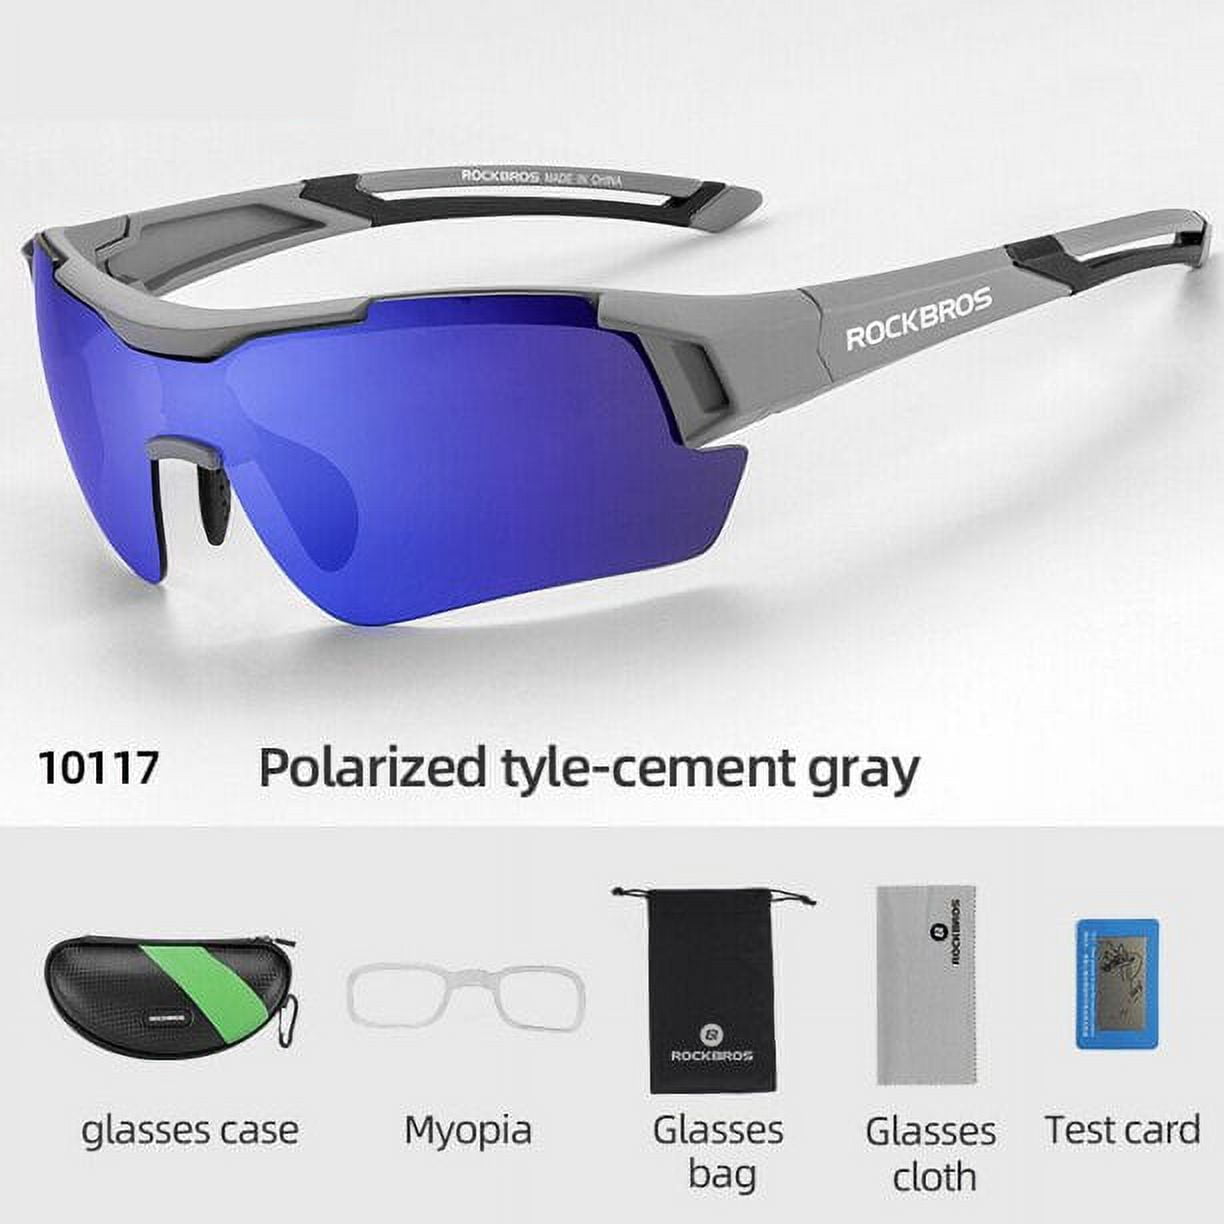 ROCKBROS Sport Sunglasses Men Women Cycling Glasses Polarized with